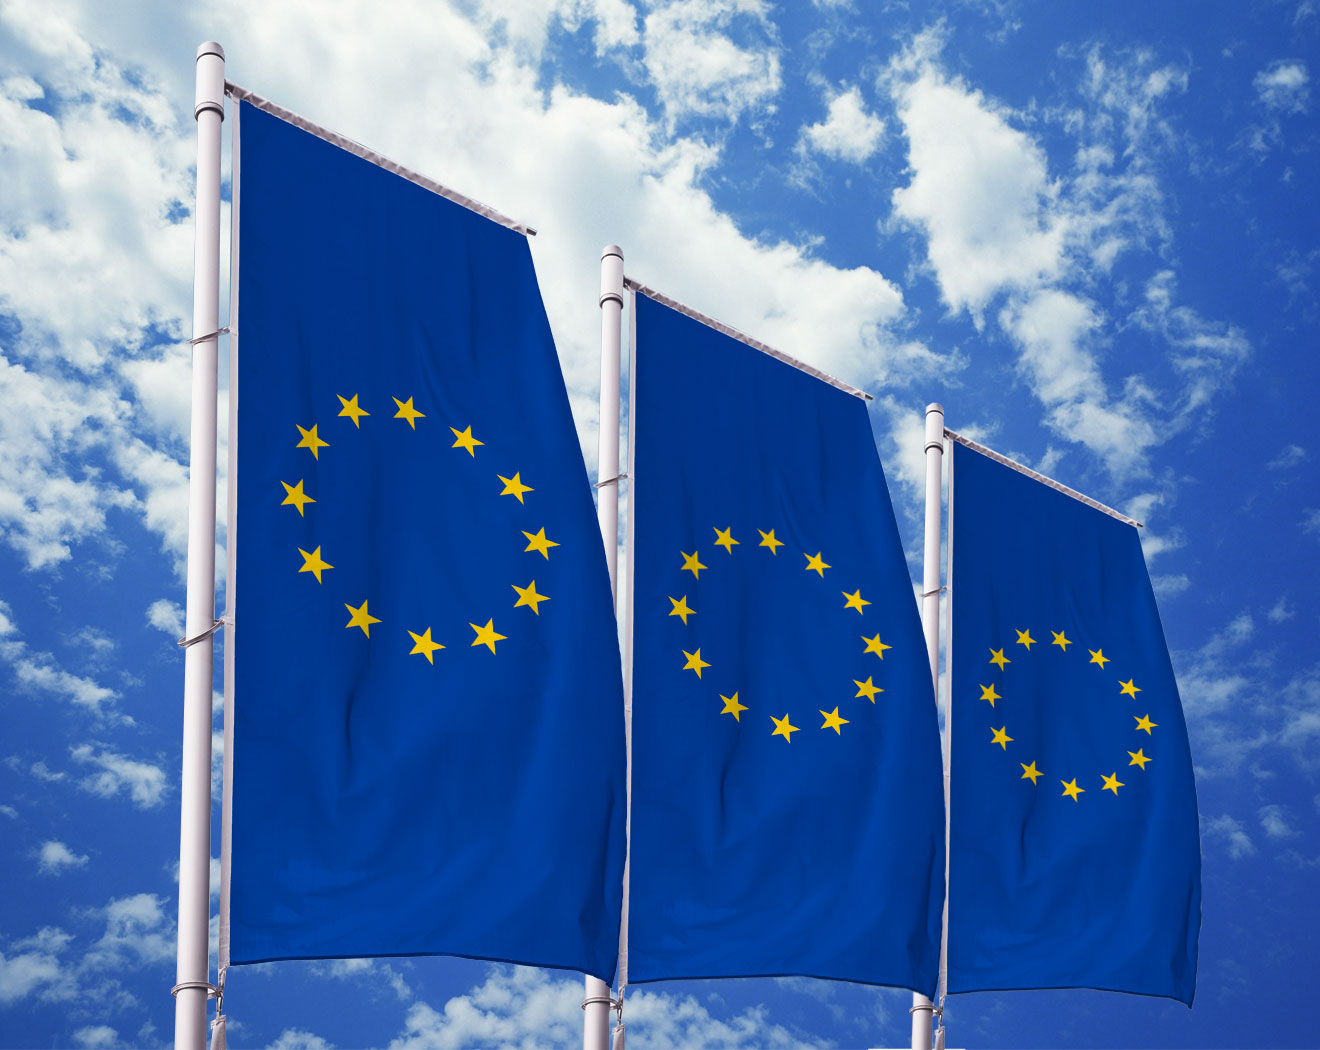 Fahne Flagge EU Europa mit Sternen 0,90m x 1,50m 0140405 